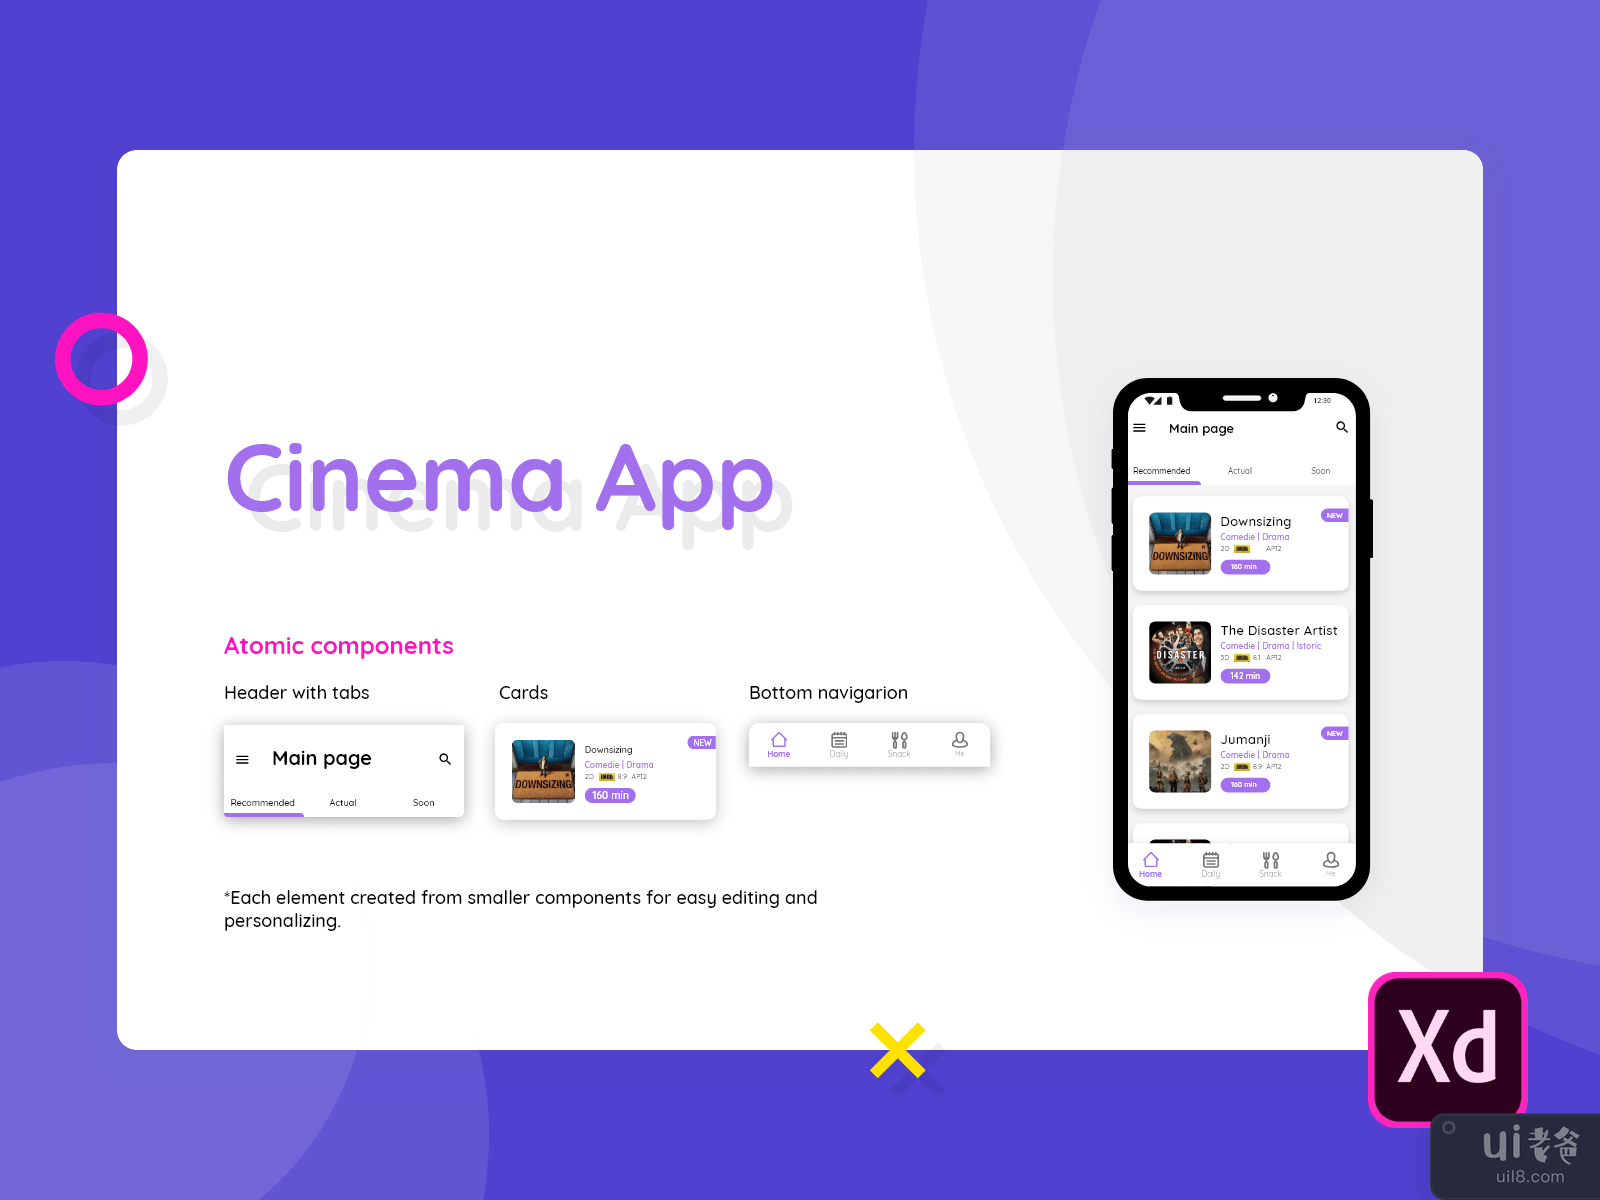 Cinema App Light Theme | Concept